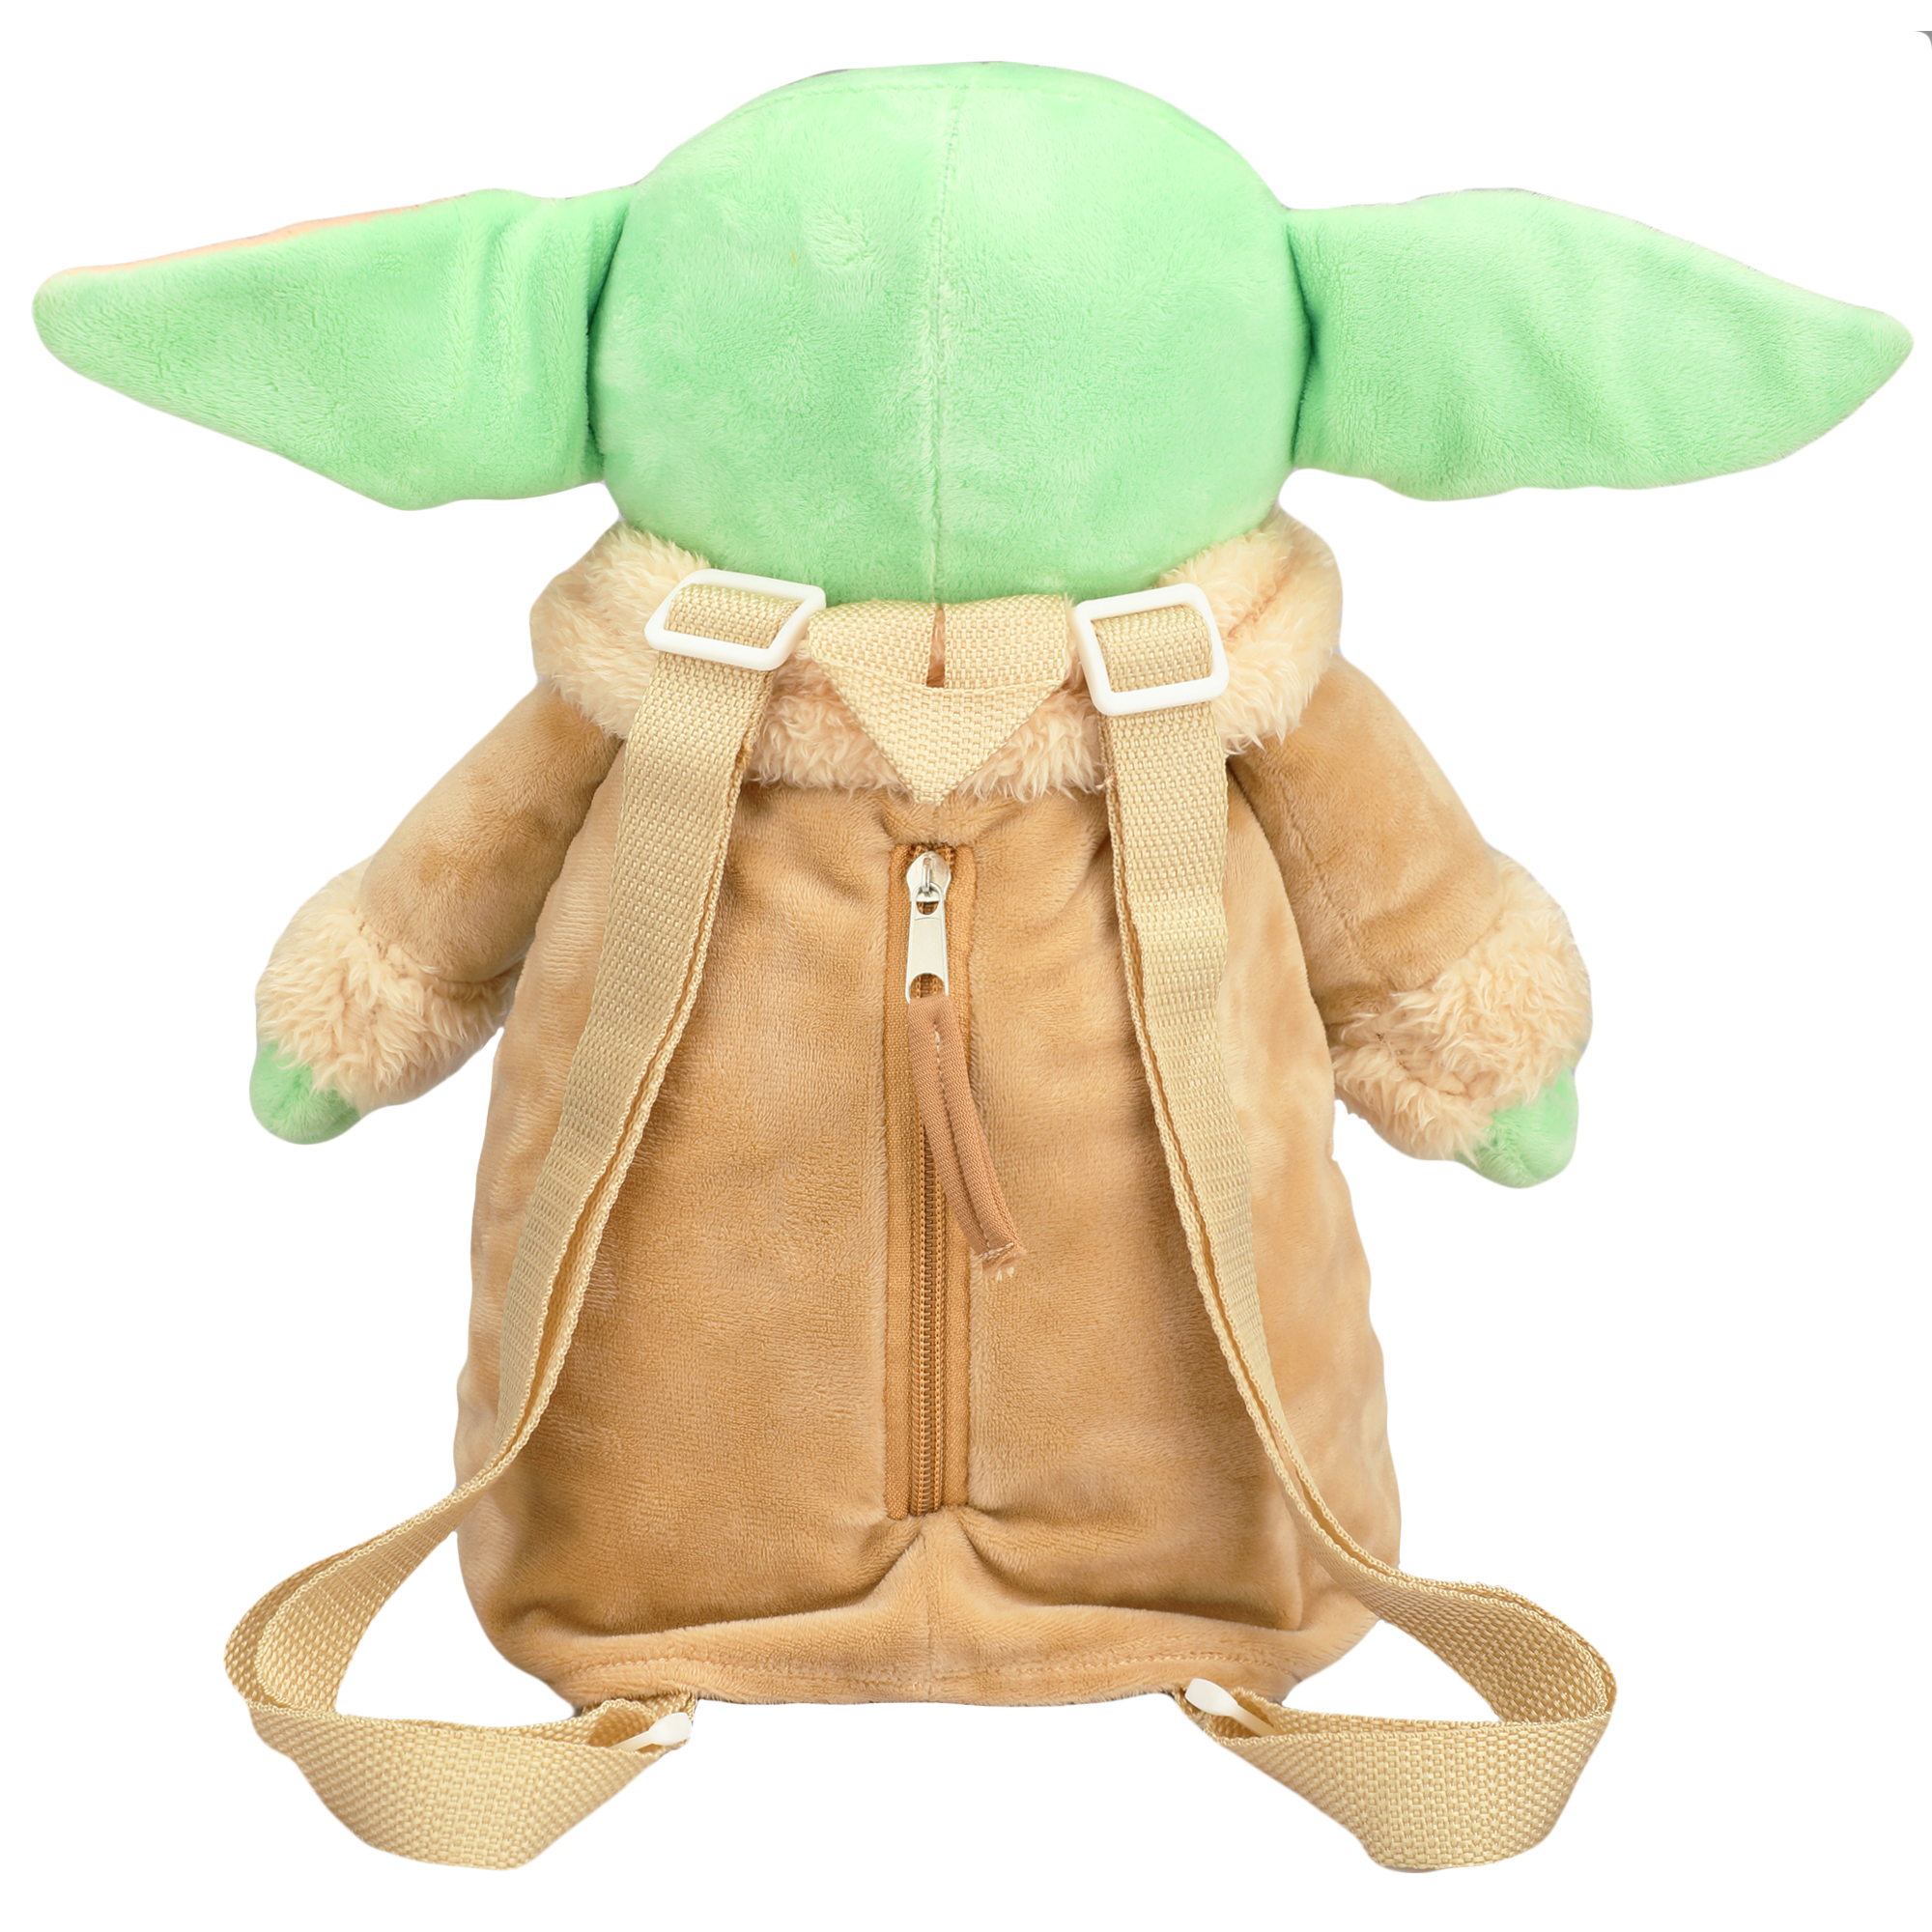 Star Wars The Mandalorian Grogu Plush toy Bag for kids - image 4 of 4